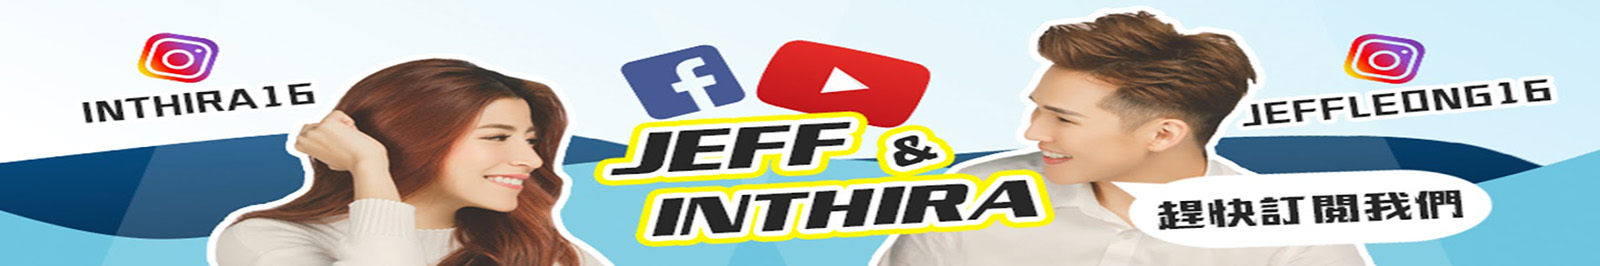 Jeff & Inthira YouTube Channel